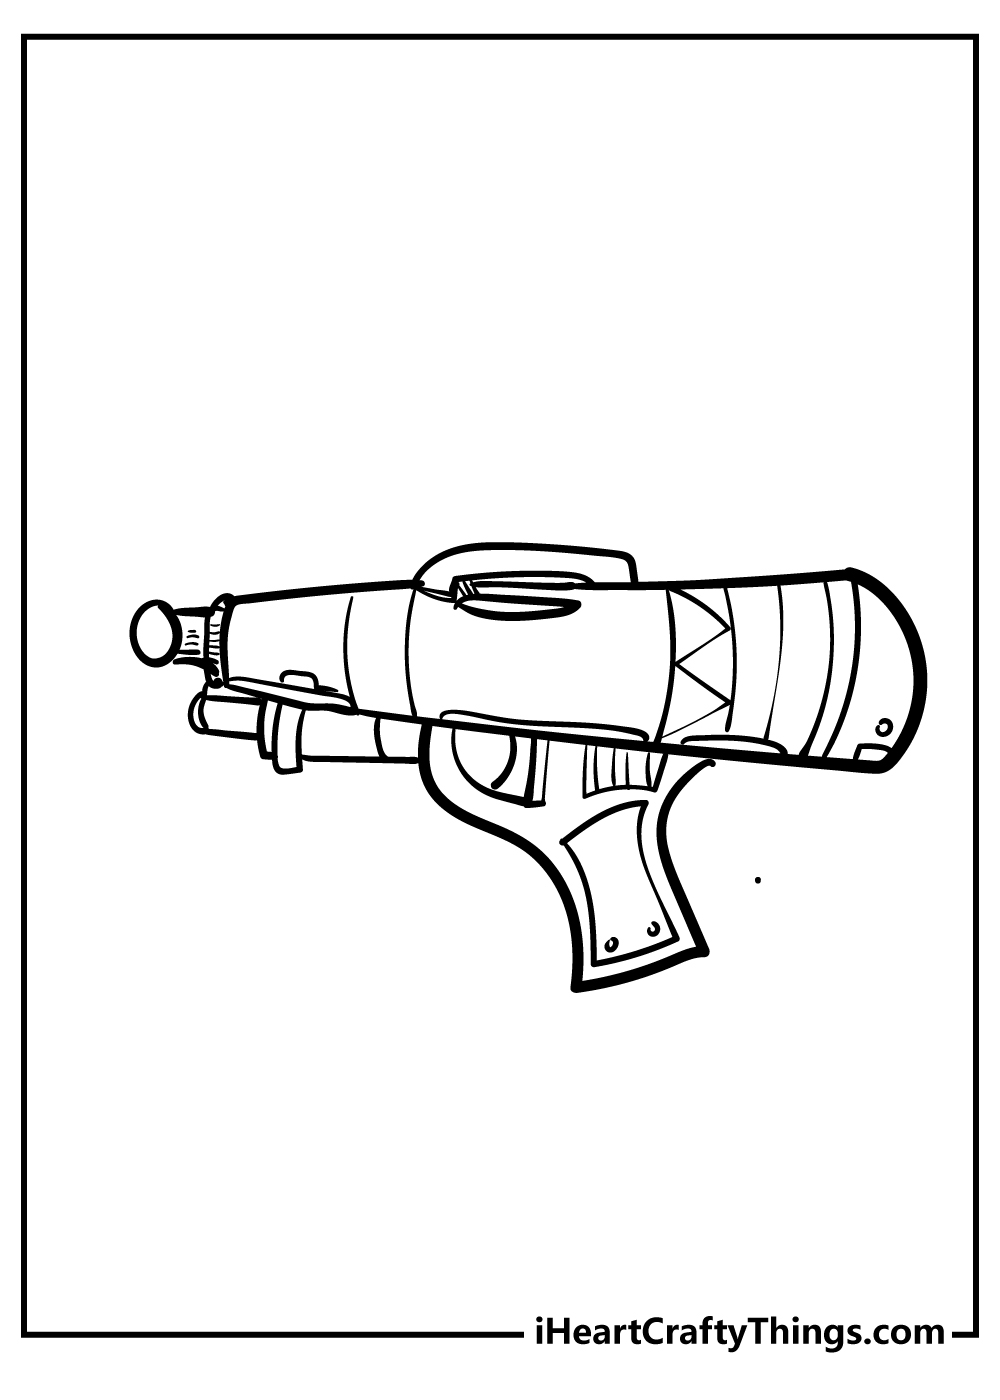 Nerf Gun Coloring Sheet for children free download